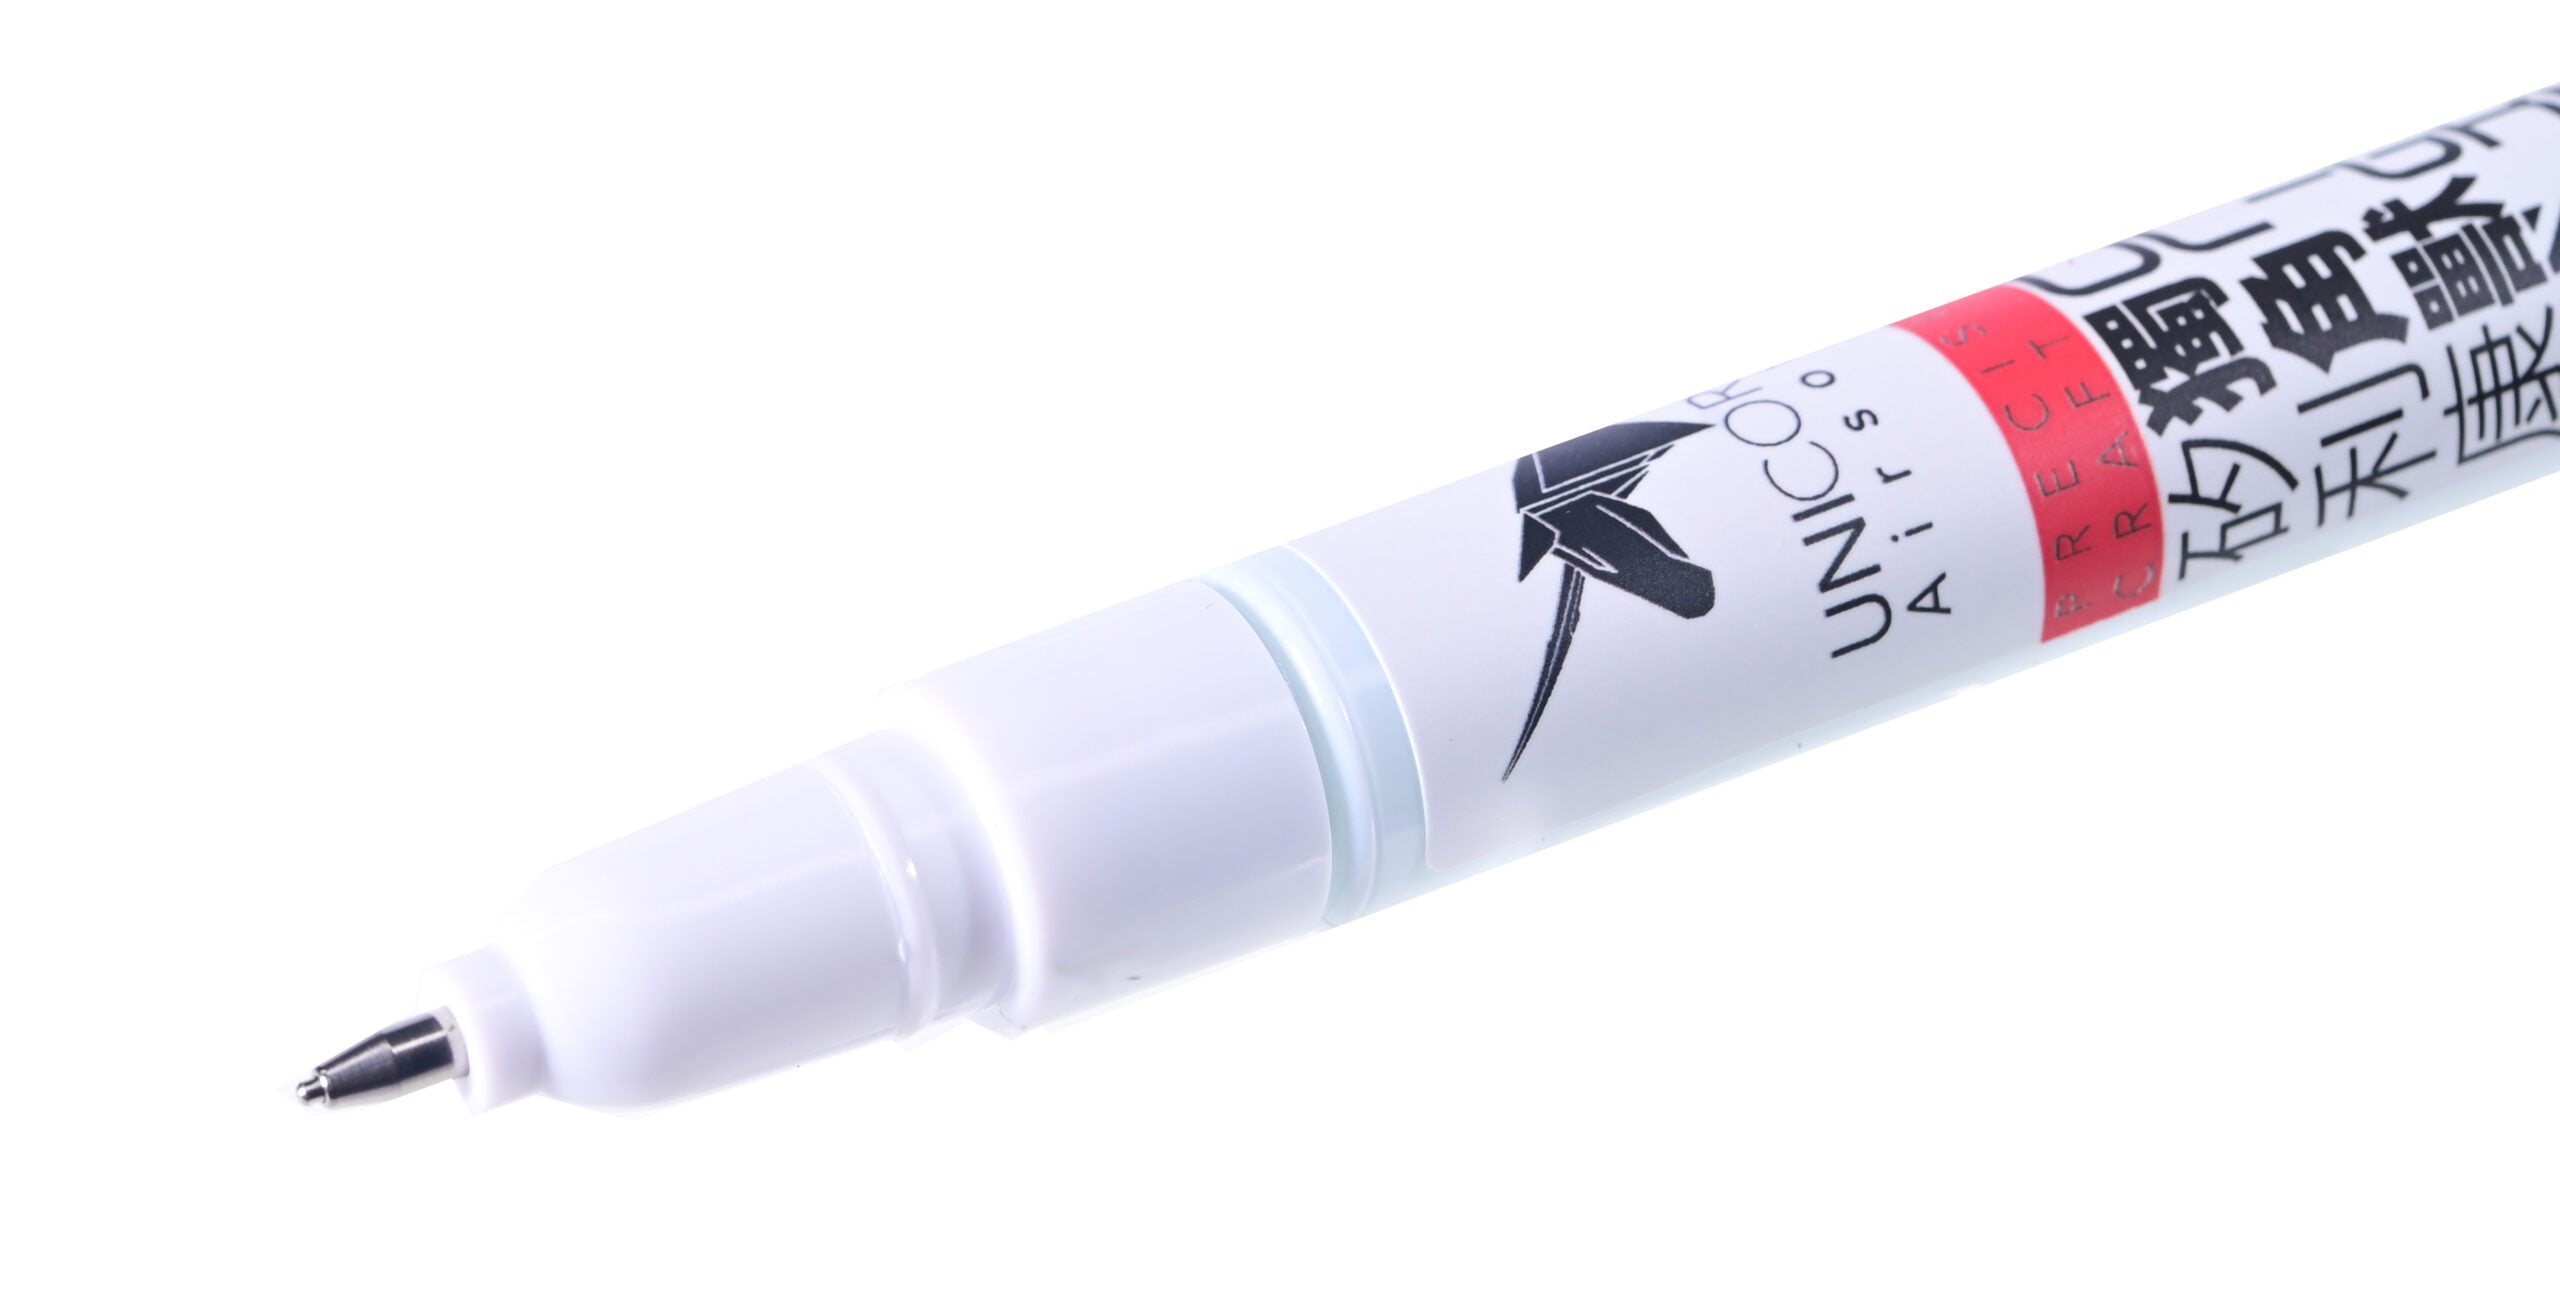 Unicorn Silicone Lubricant (Pen Type)